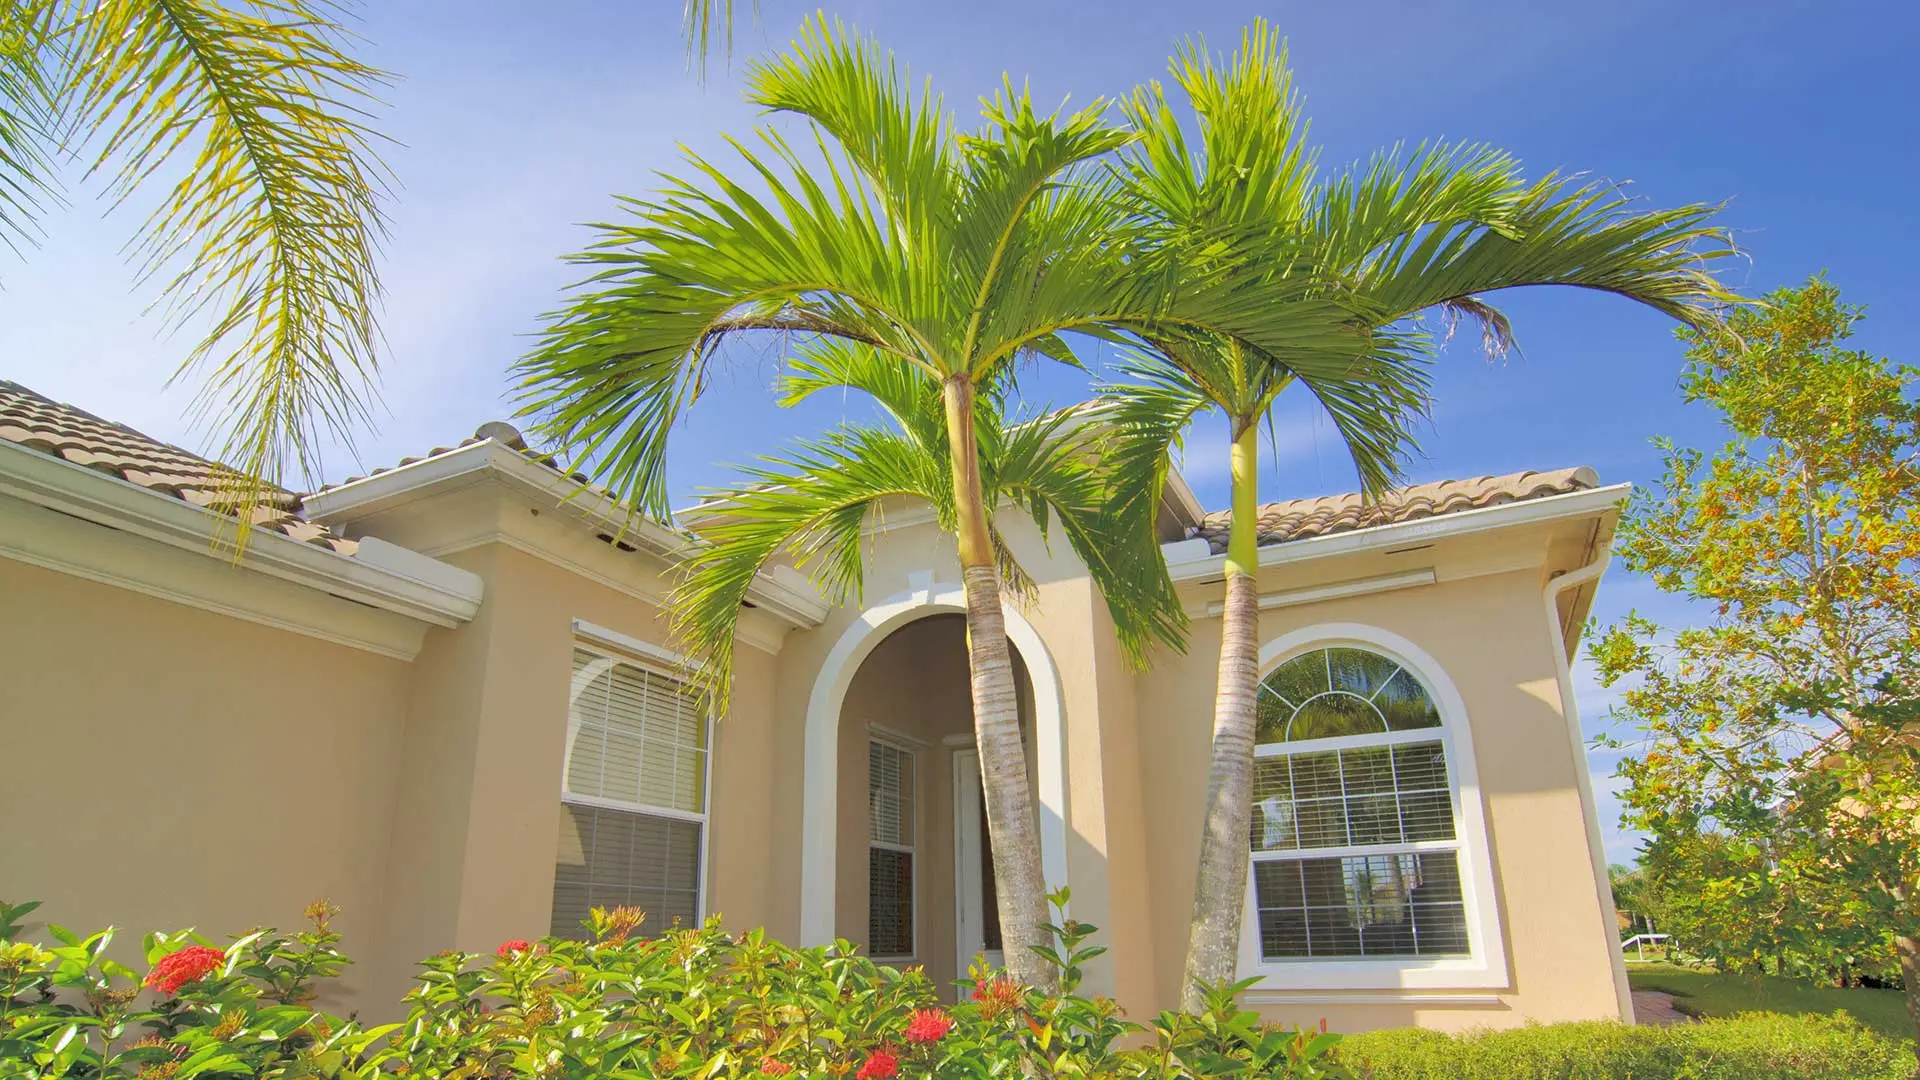 Palm trees shown in landscape for a home in Estero, FL.